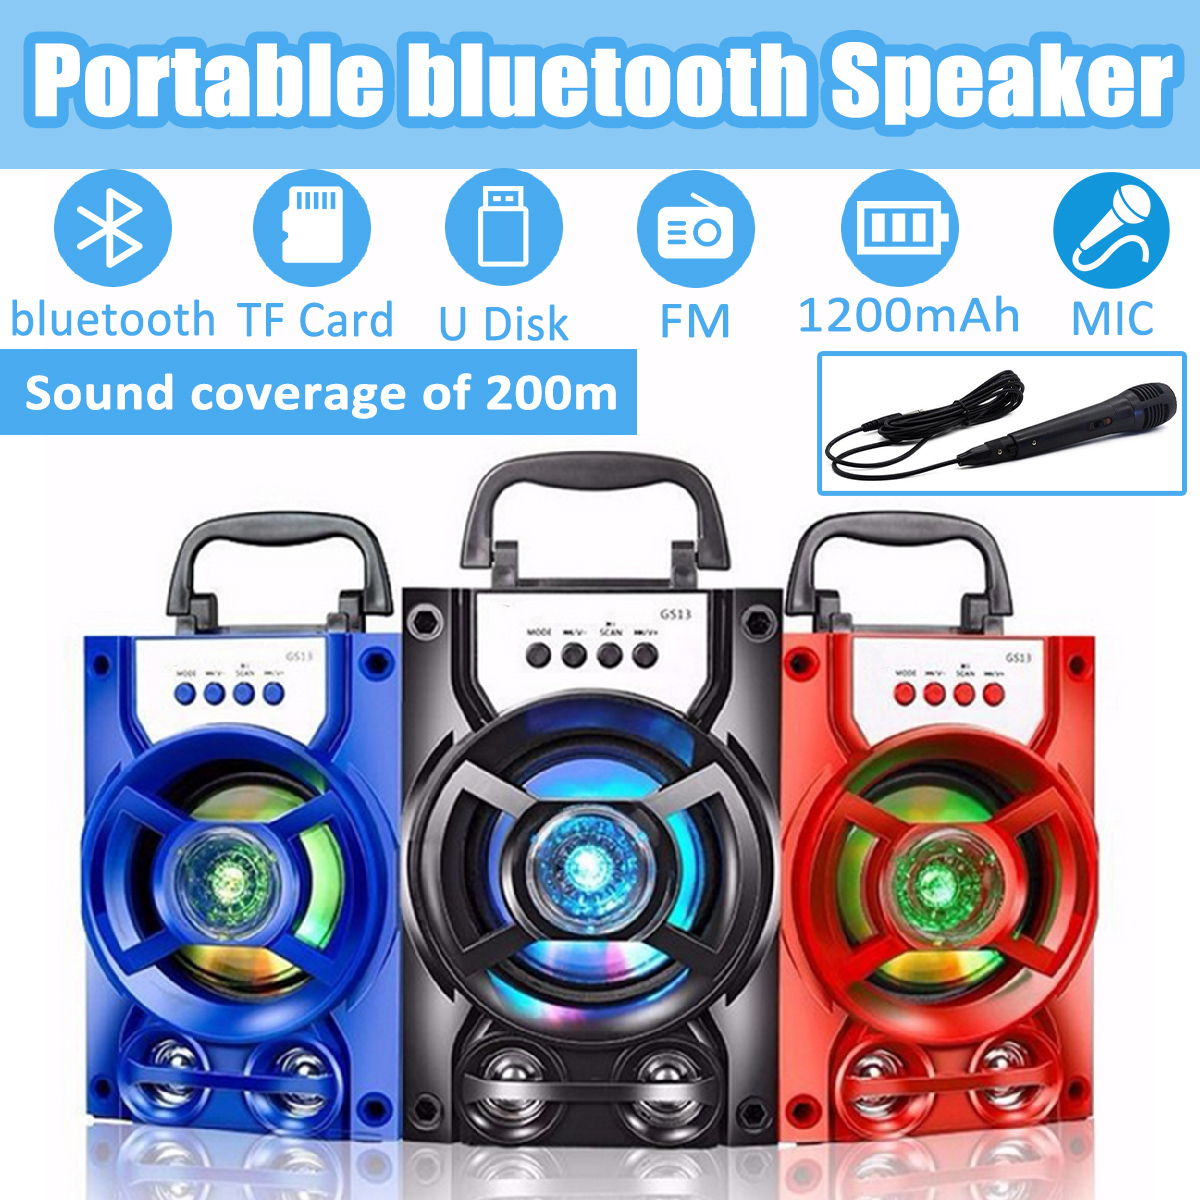 Portable-bluetooth-Subwoofer-Speaker-TF-Card-U-Disk-Music-Player-FM-Radio-Microphone-for-Meeting-Dan-1561243-1